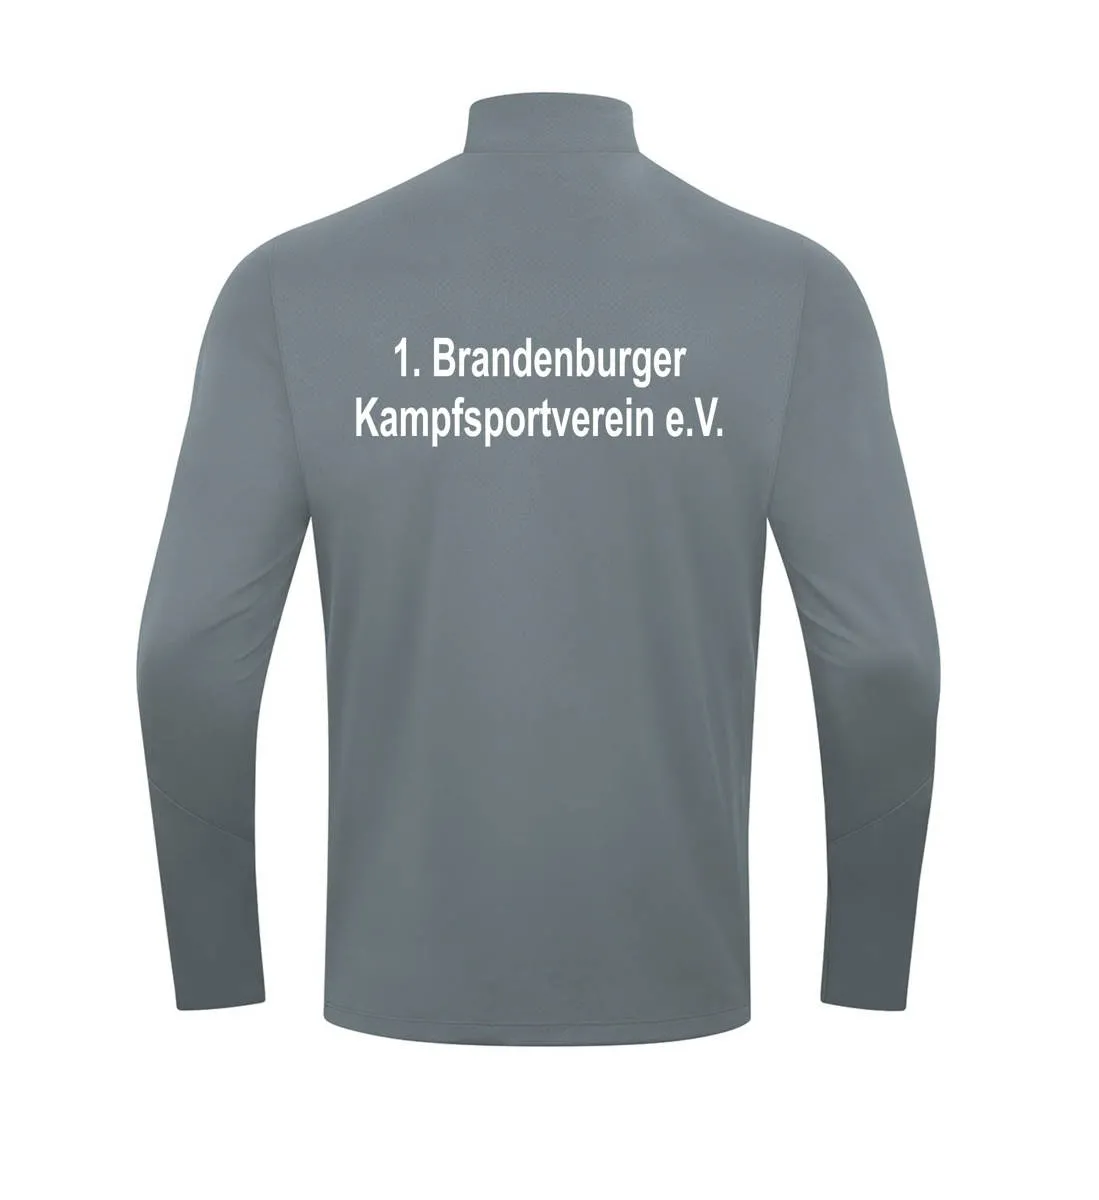 Camiseta de manga larga JAKO Brandenburger Kampfsportverein